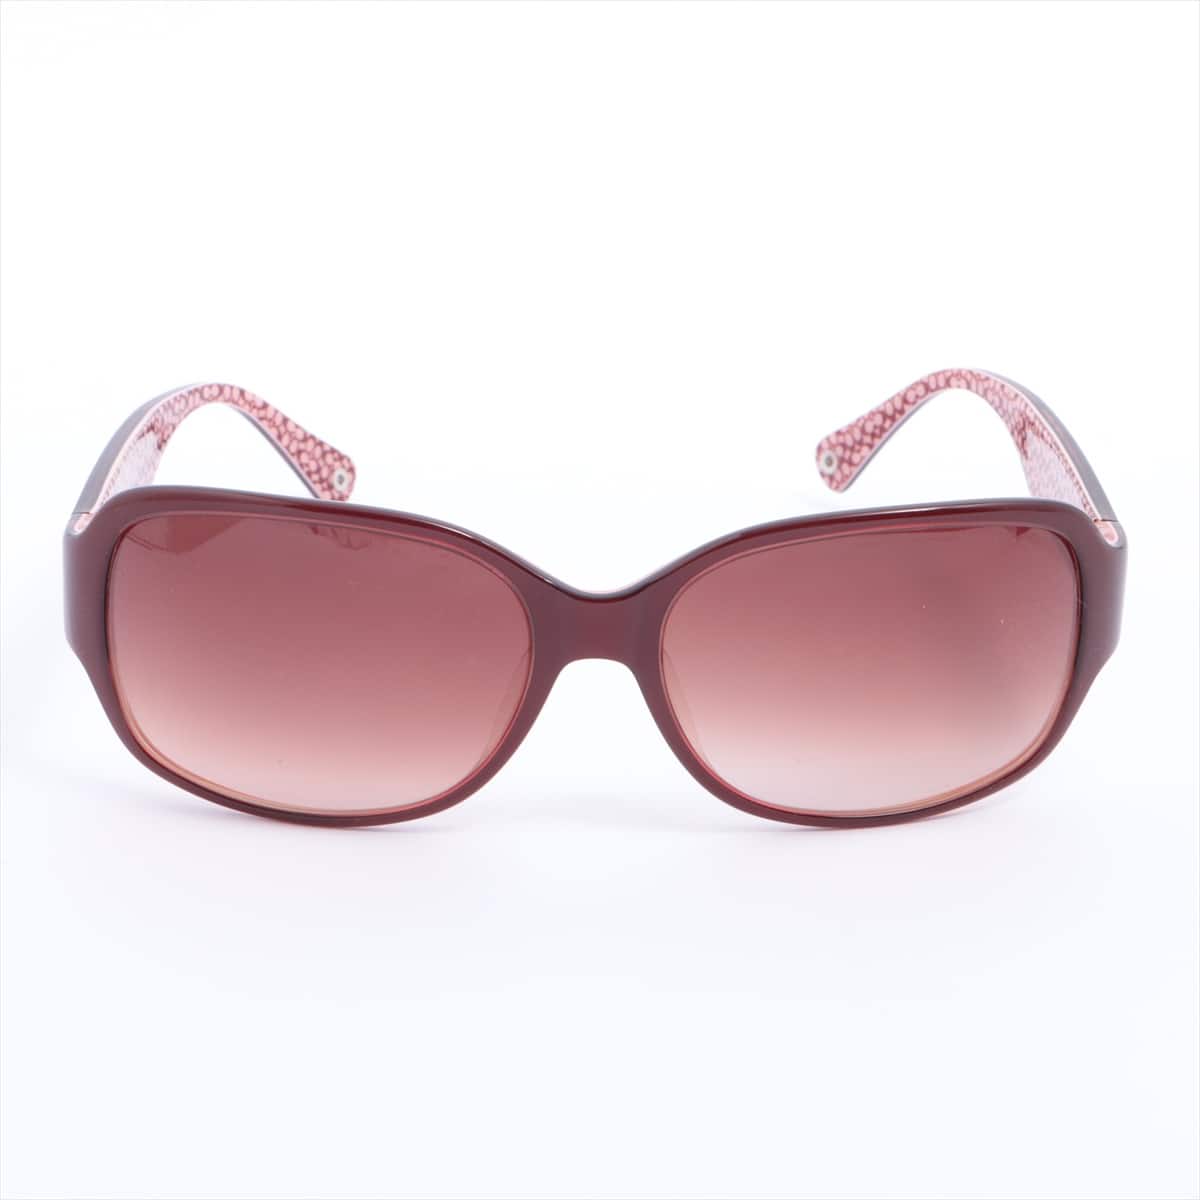 COACH Sunglasses Plastic Pink